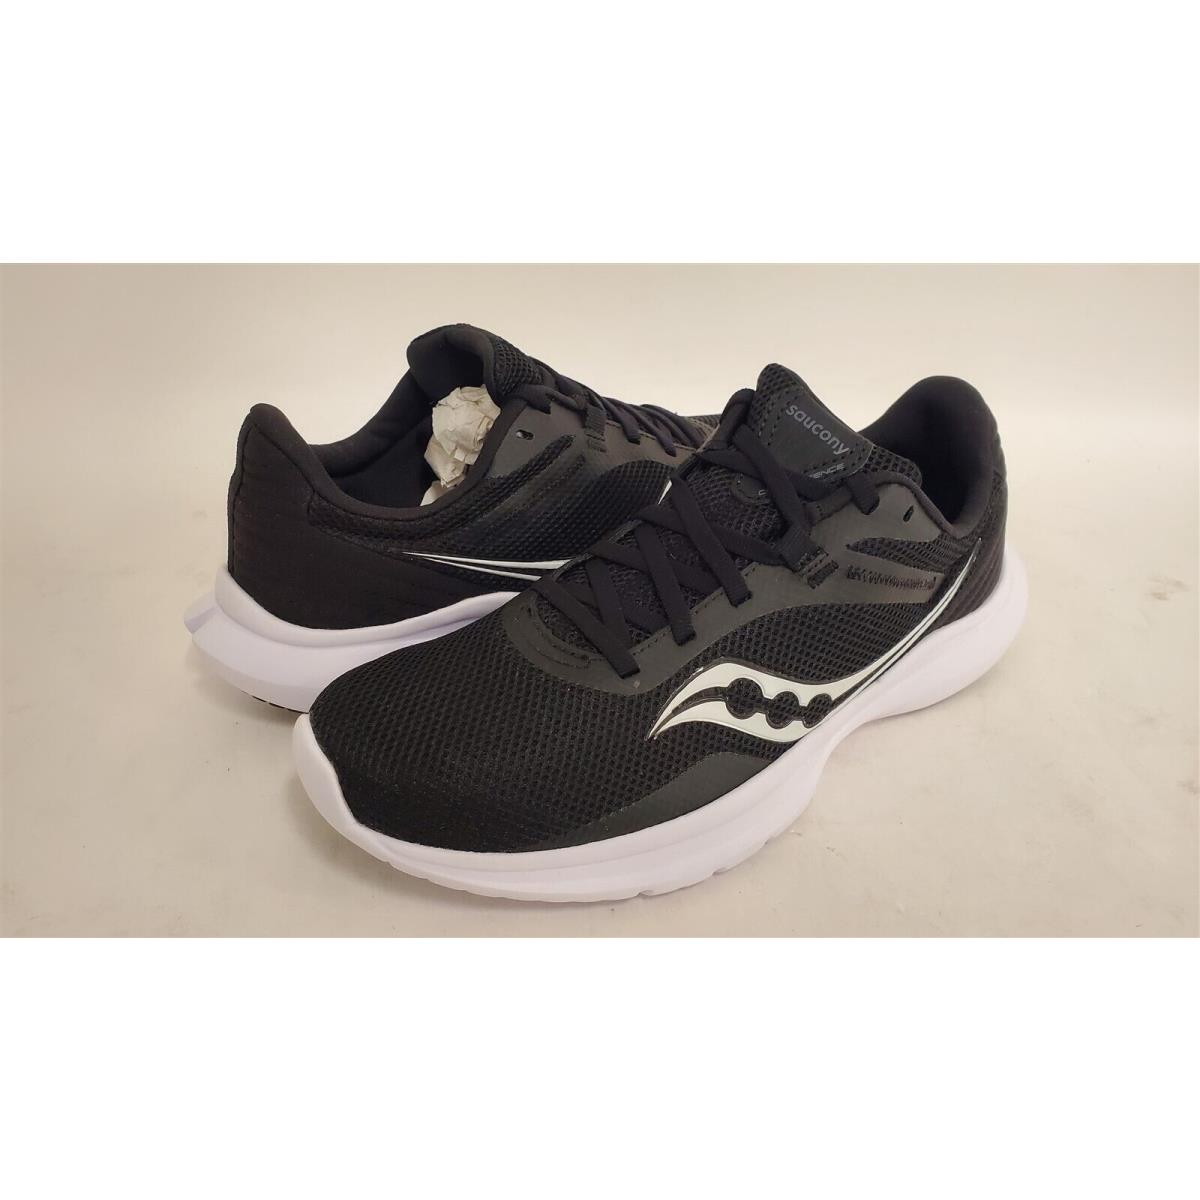 Saucony Men`s Convergence Running Sneaker Shoes Black/white 7.5 M US